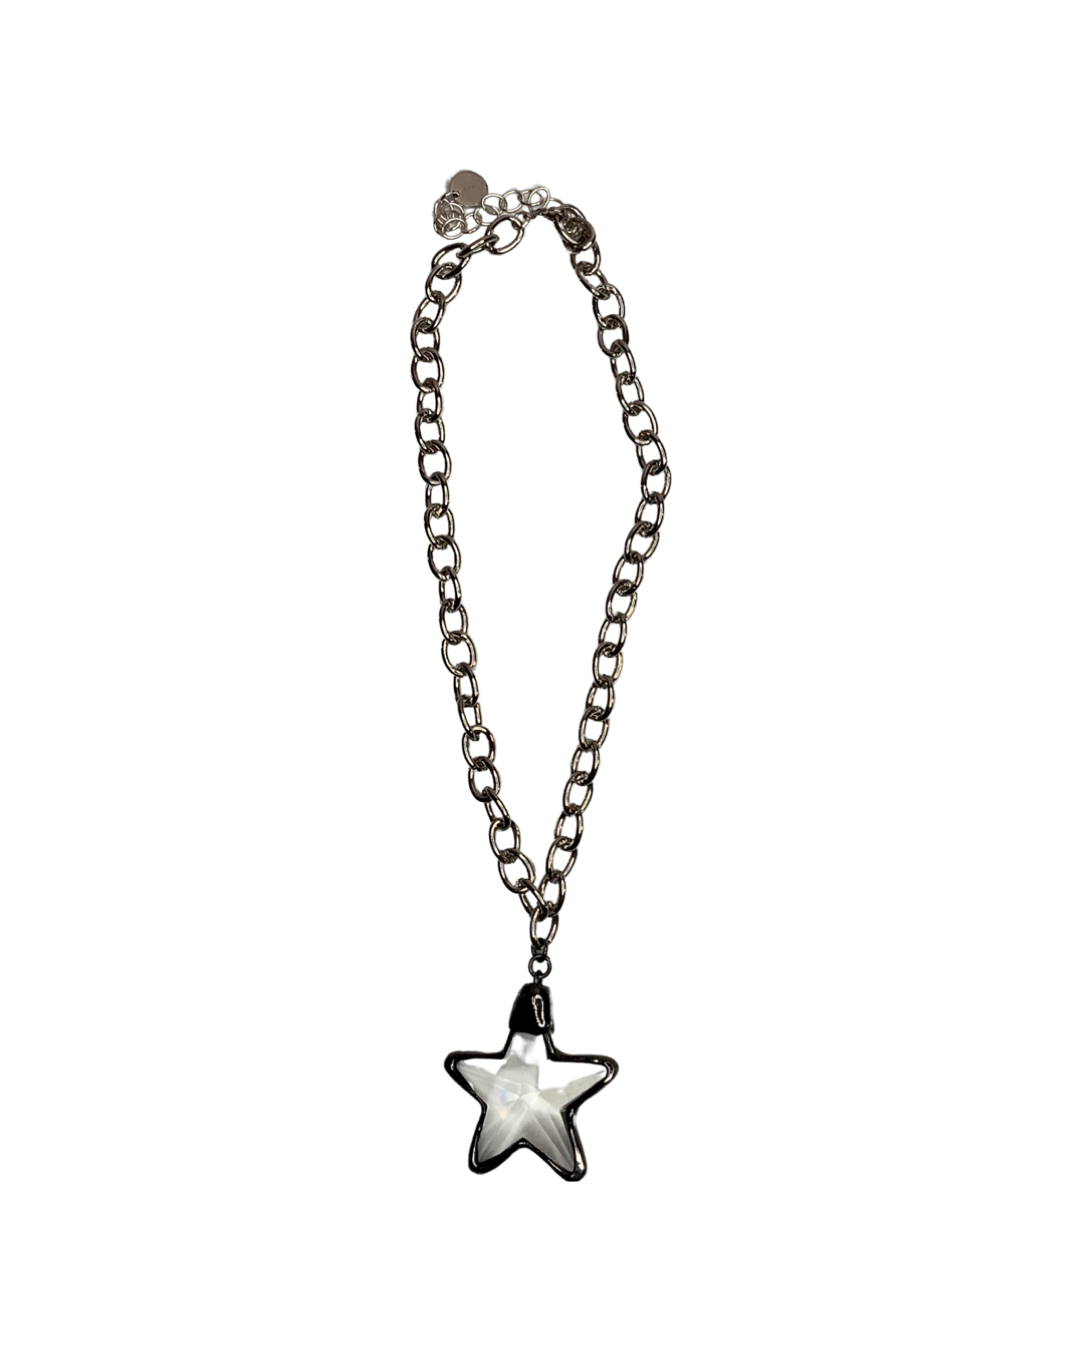 Lula N Lee LNL041-24 Silver Pltd Chain Necklace W/Star Pendant 